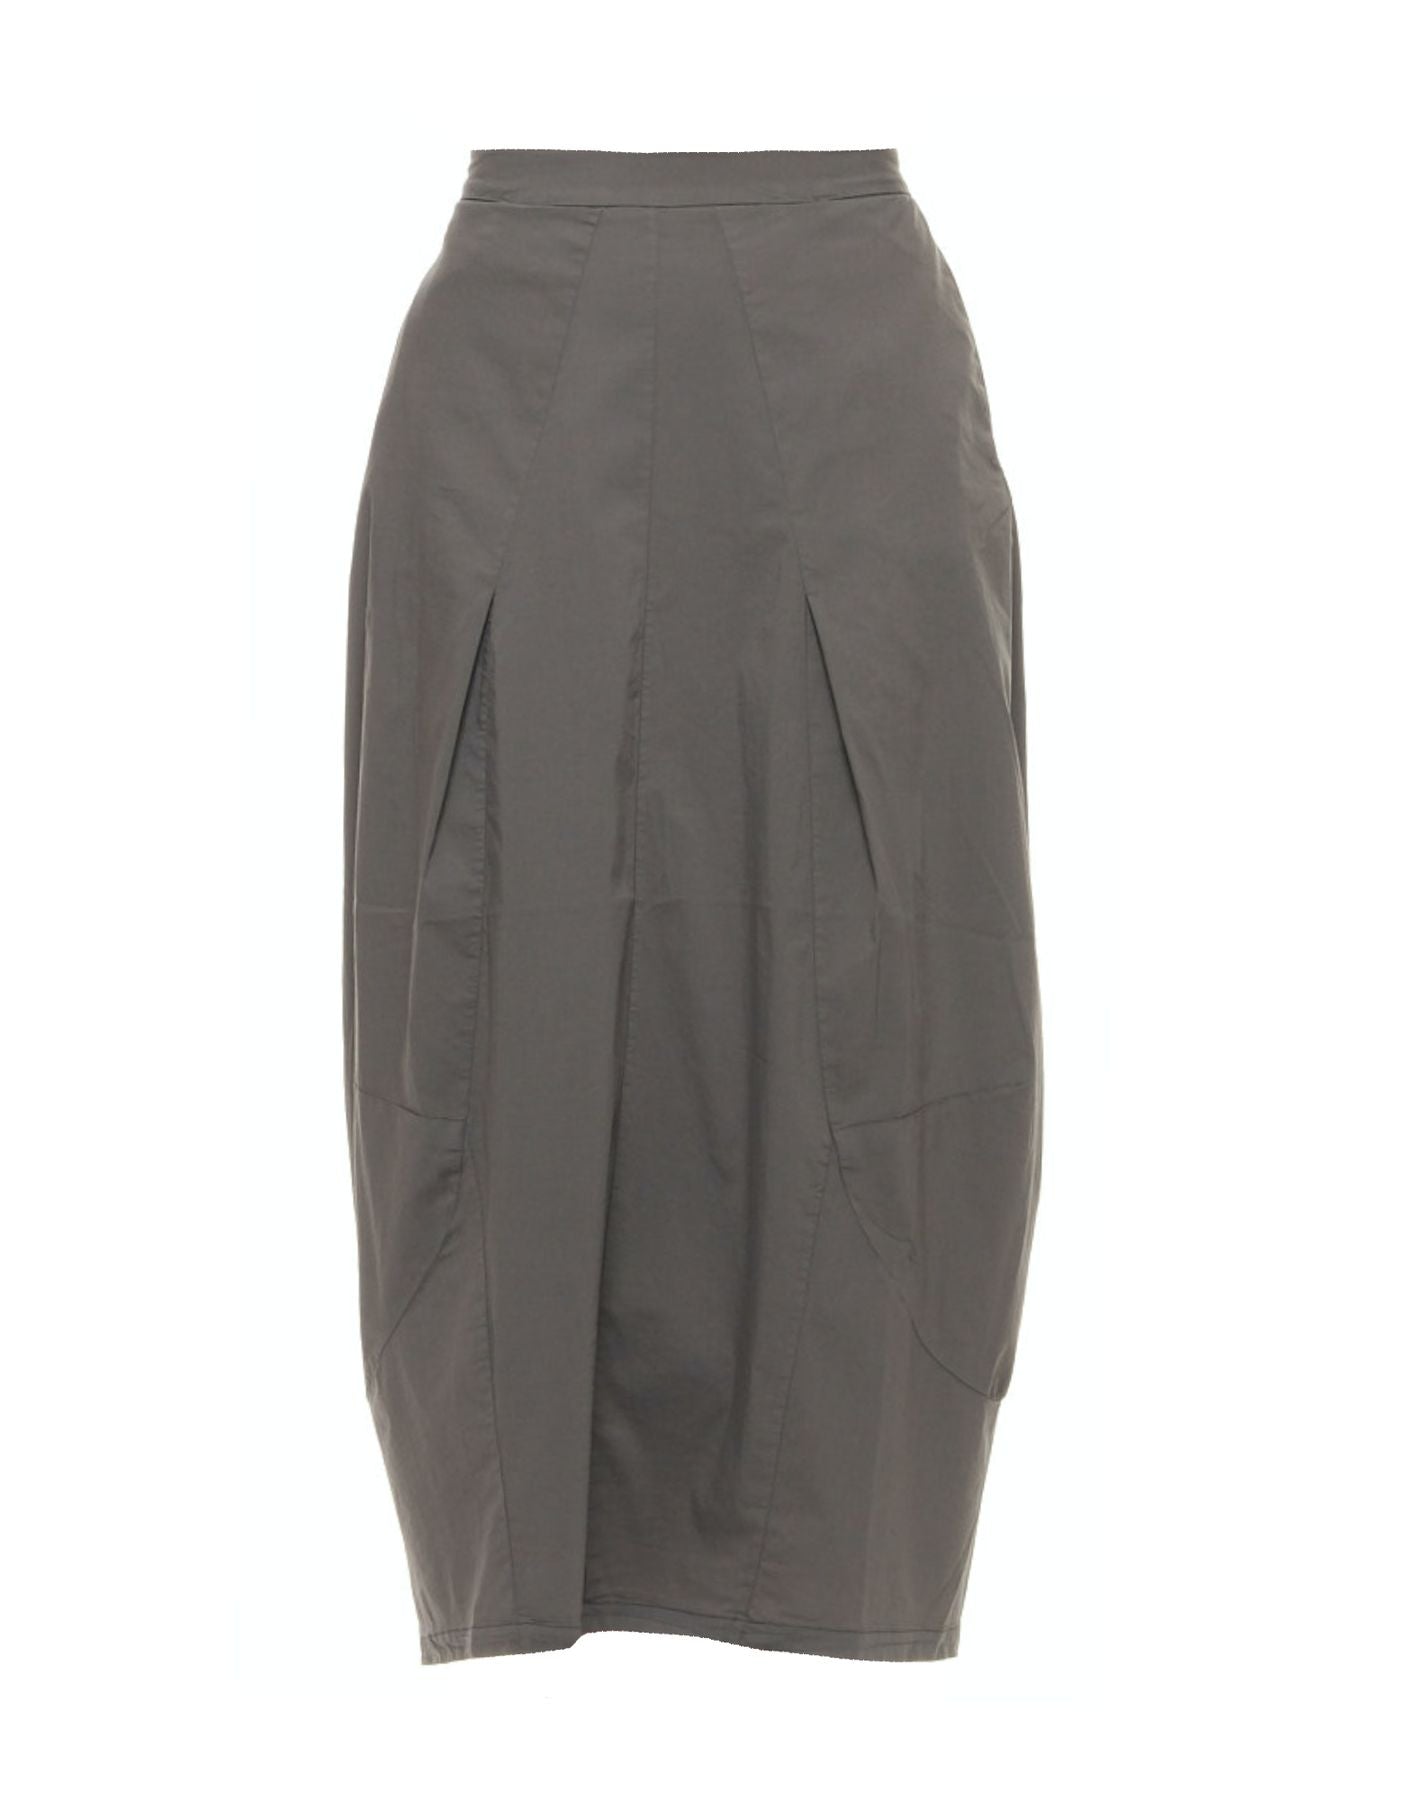 Skirt for woman CFDTRWM226 12 GREY TRANSIT